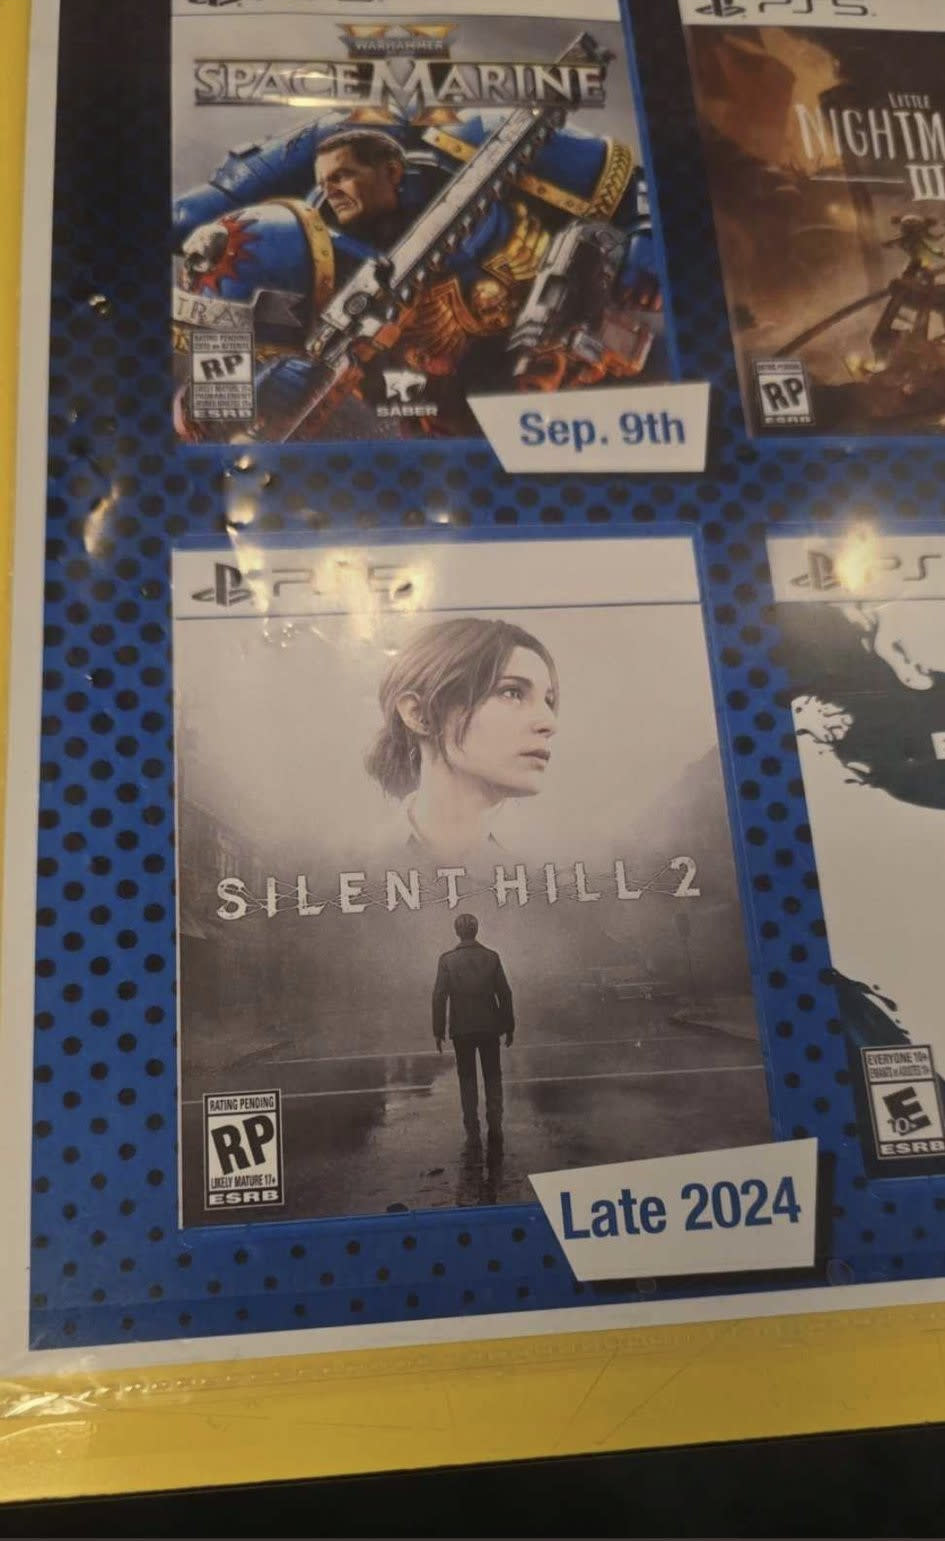 Silent Hill 2 Remake debutaría a finales de 2024 según GameStop (imagen: SiletHillSin, vía Twitter, X)